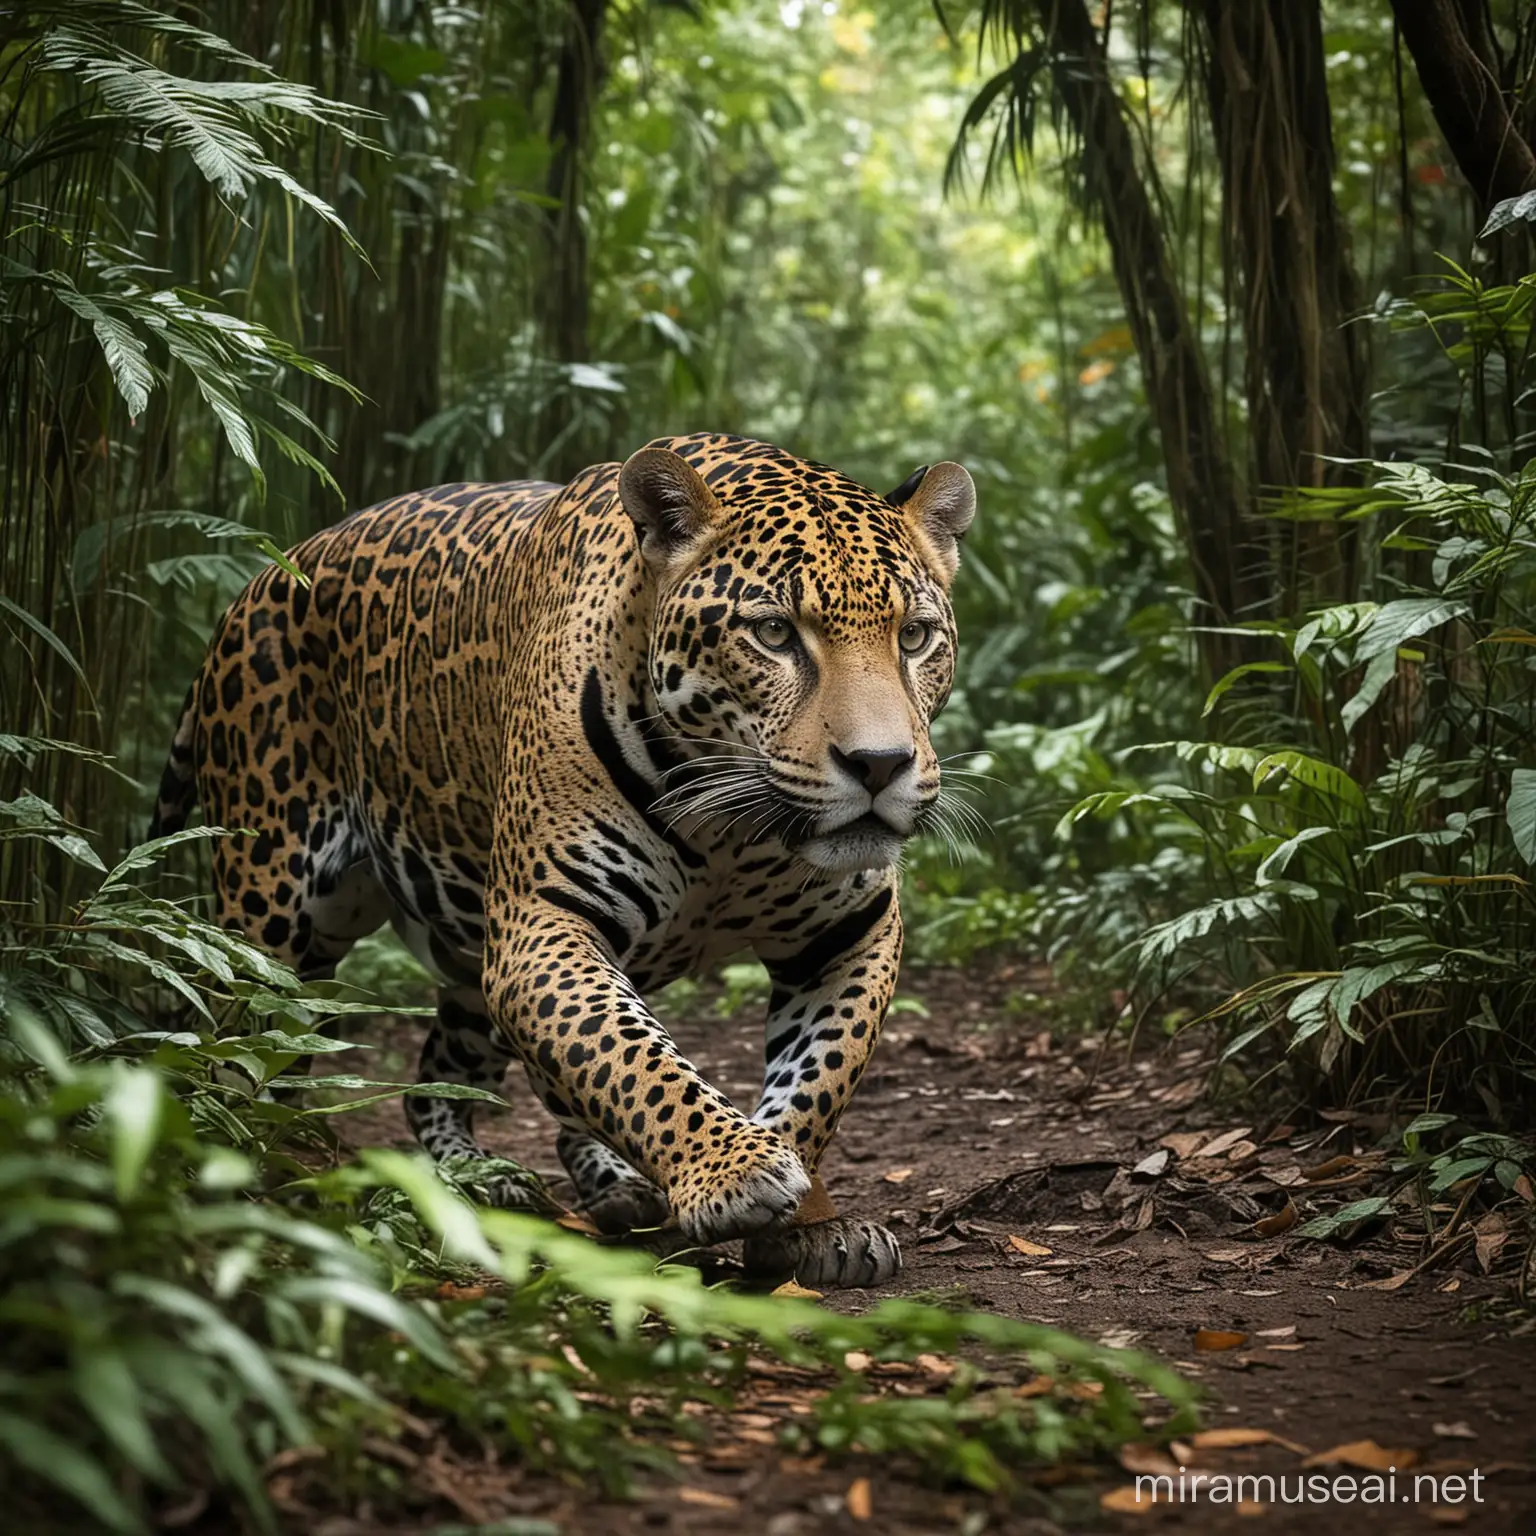 Majestic Jaguar Roaming in the Lush Jungle Habitat